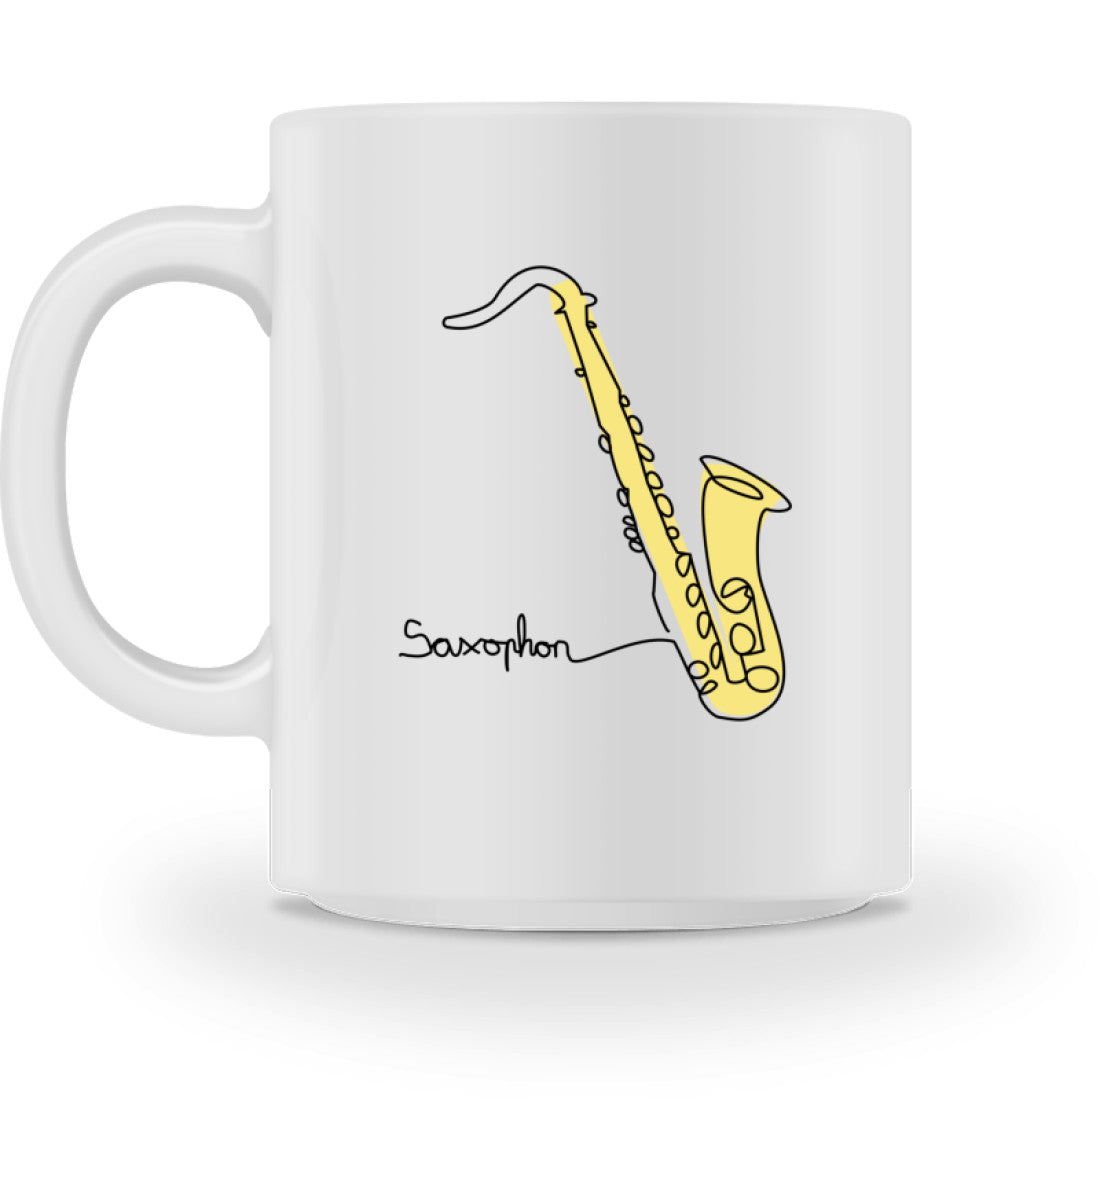 Saxophon Tasse